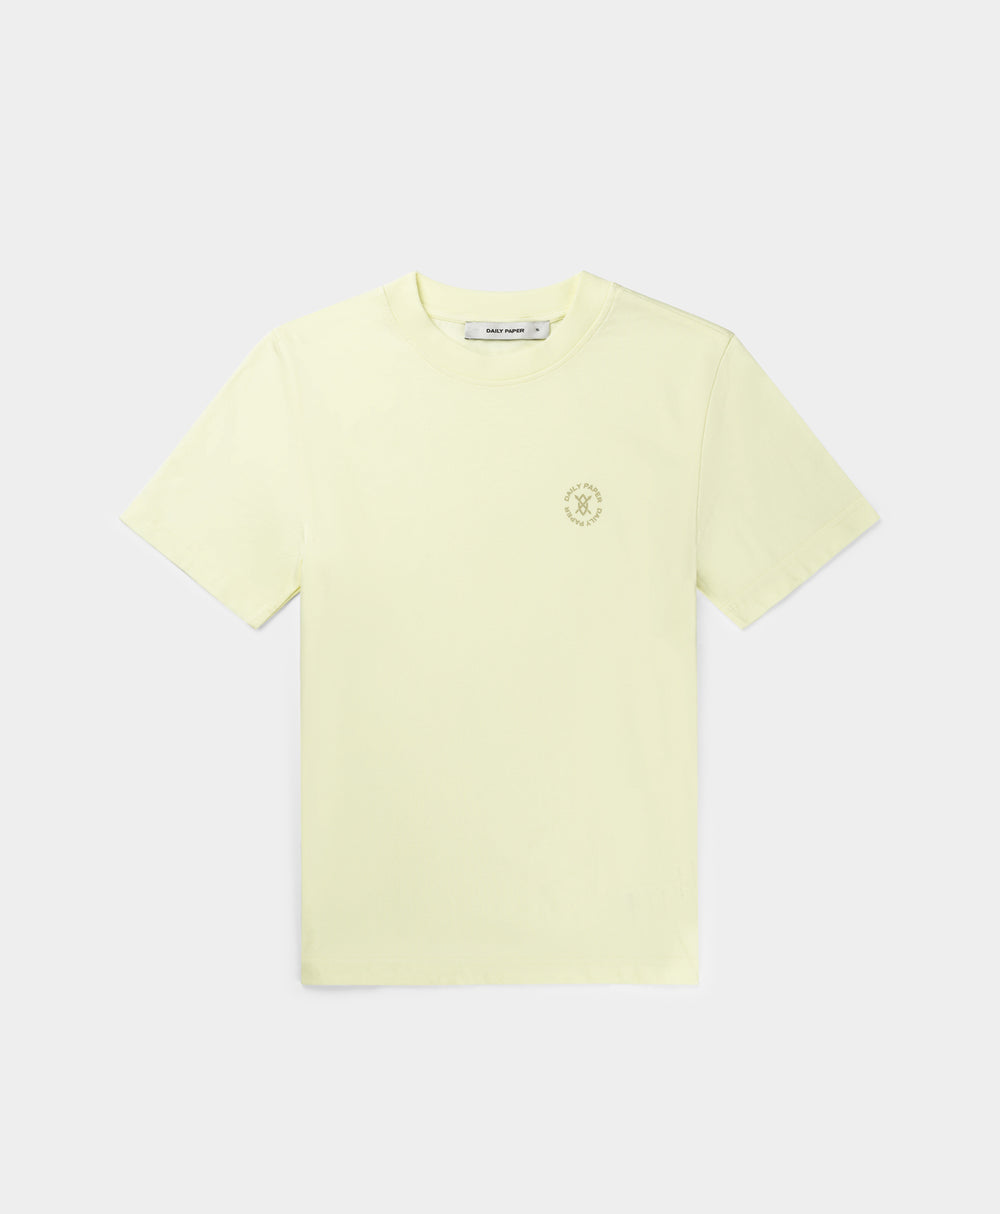 DP - Icing Yellow Circle  T-Shirt - Packshot - Front